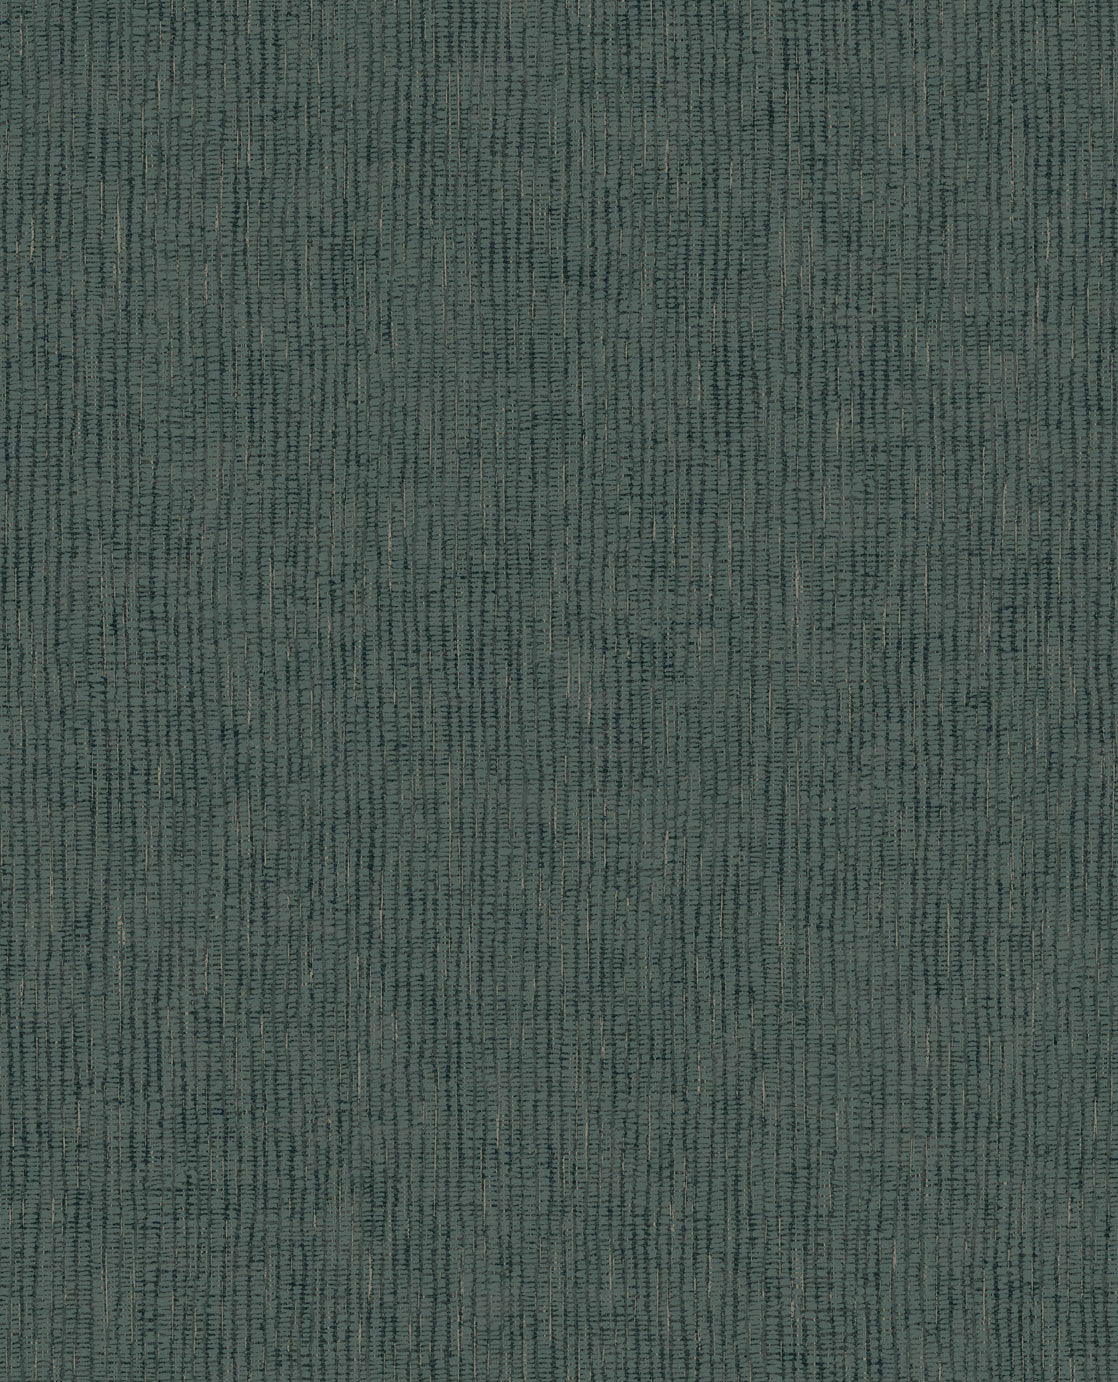 Terra Textured Grassy wallpaper